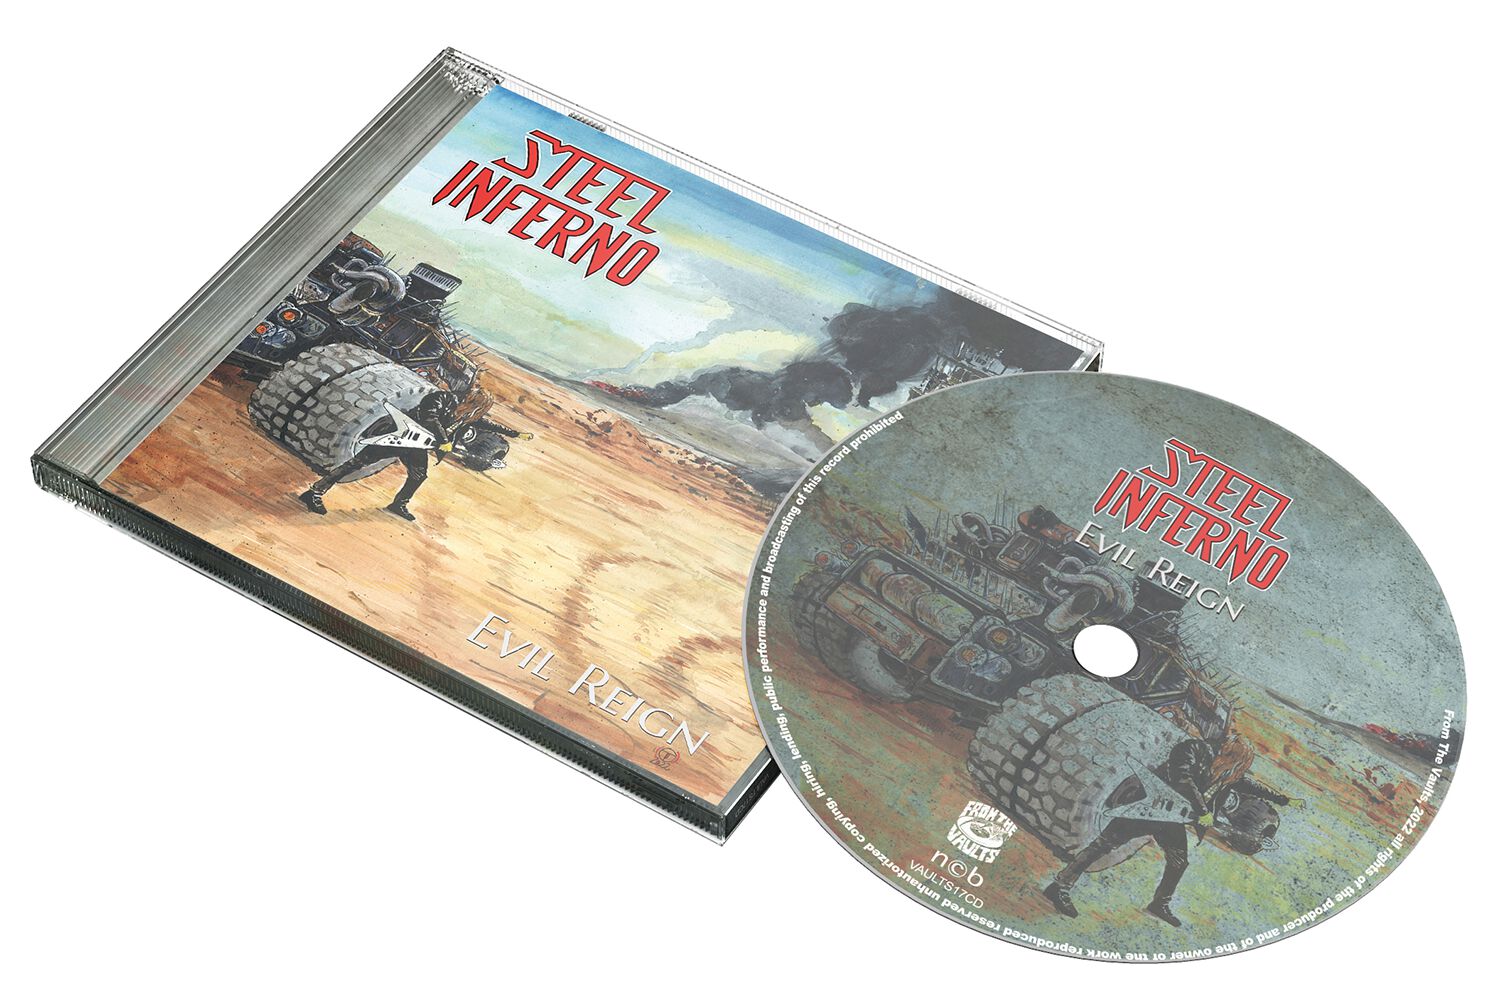 Steel Inferno Evil reign CD multicolor